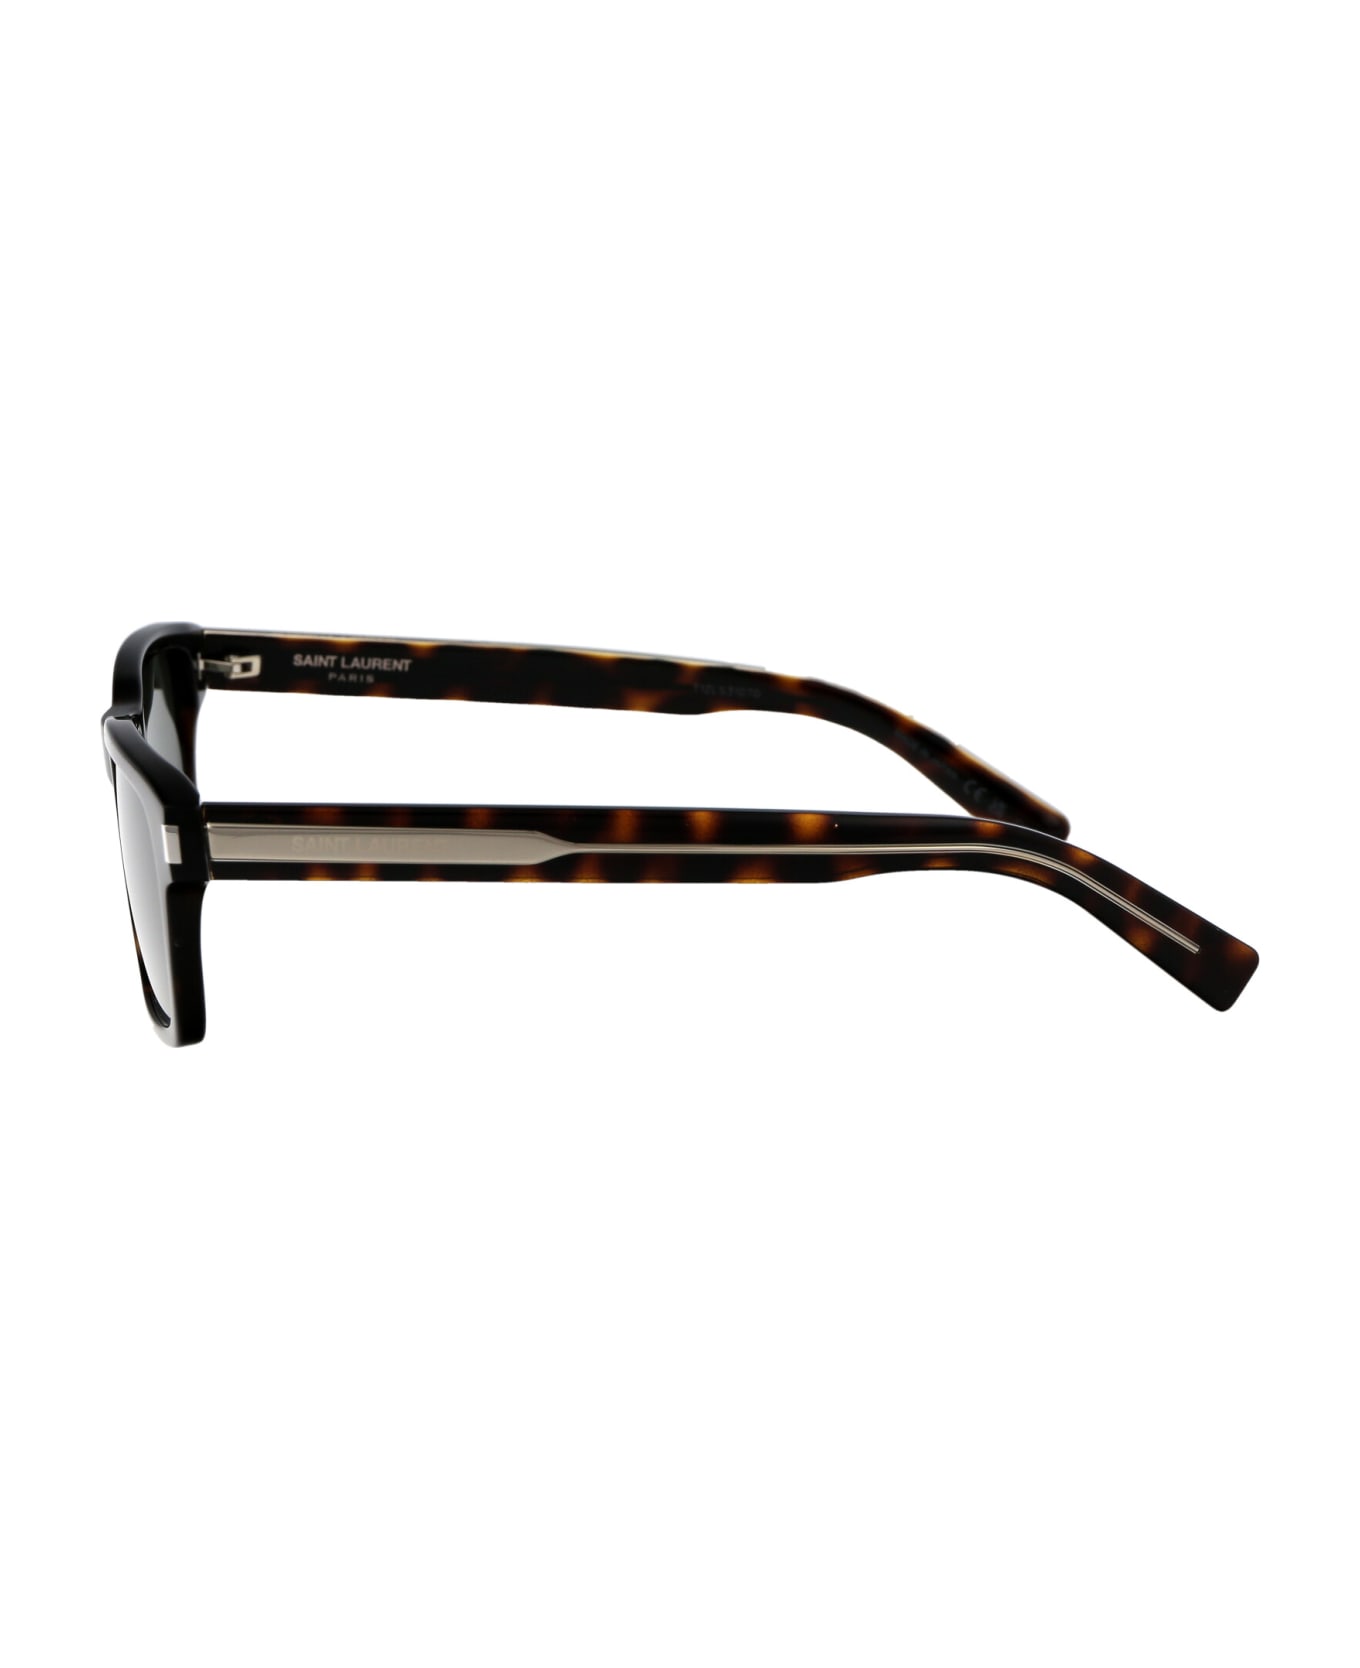 Saint Laurent Eyewear Sl 662 Sunglasses - 004 HAVANA CRYSTAL GREY サングラス